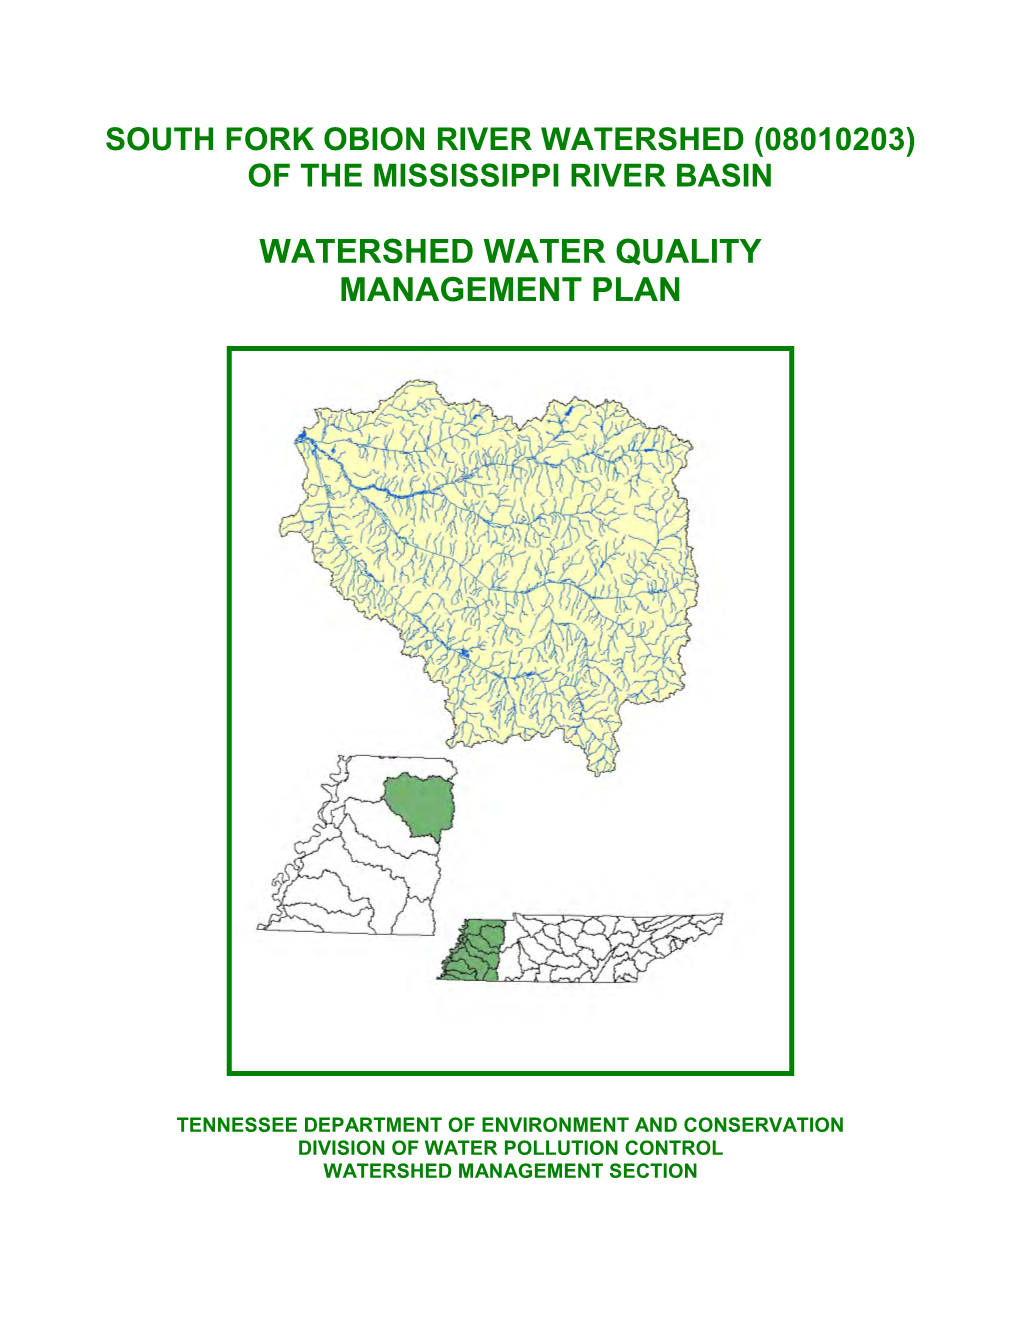 South Fork Obion River Watershed (08010203) of the Mississippi River Basin